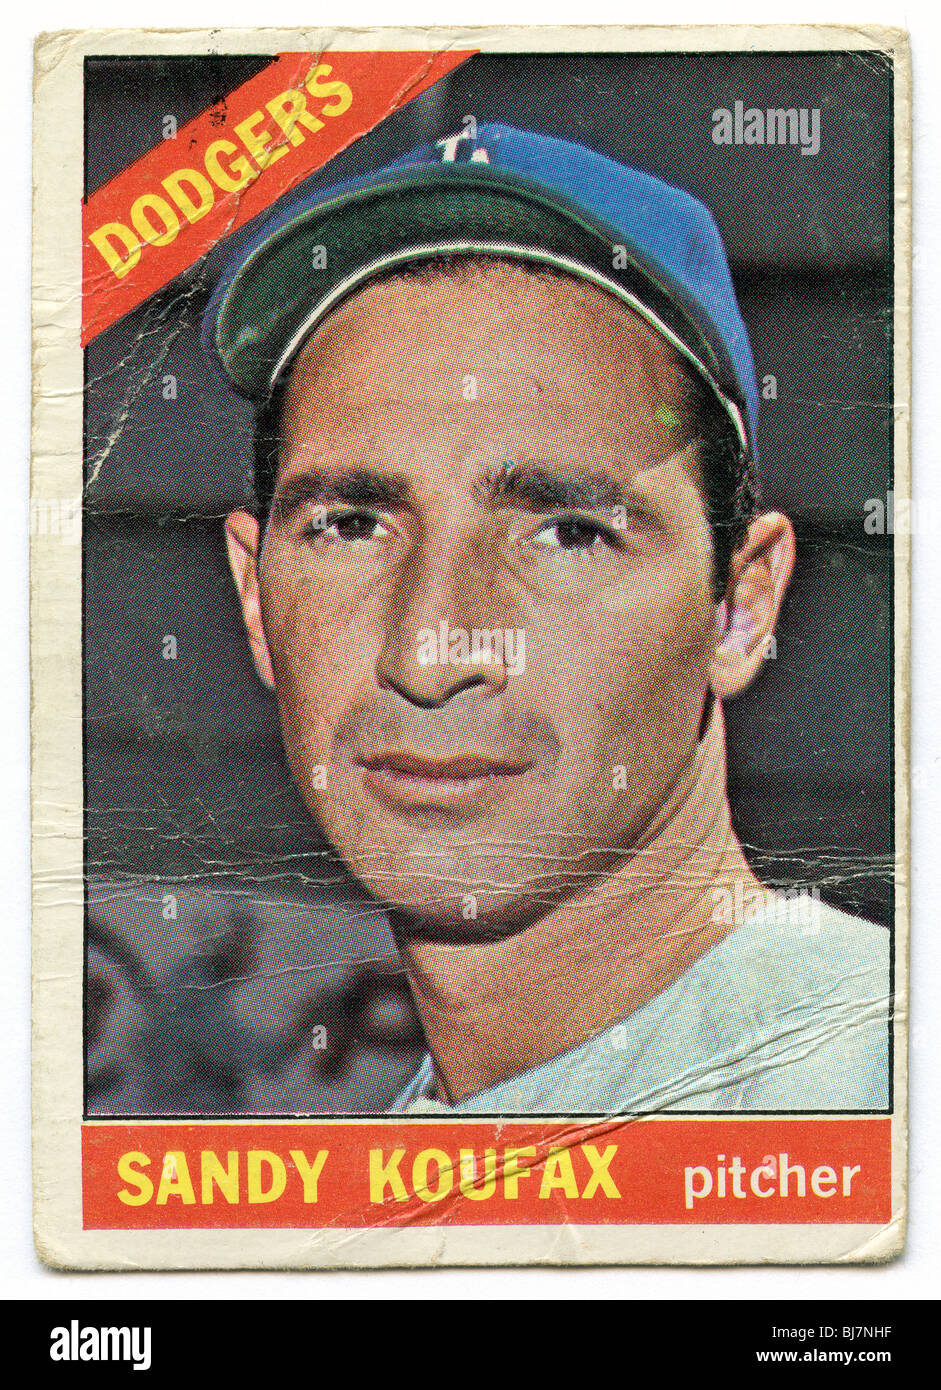 Collectible baseball card - Sandy Koufax of Dodgers Stock Photo